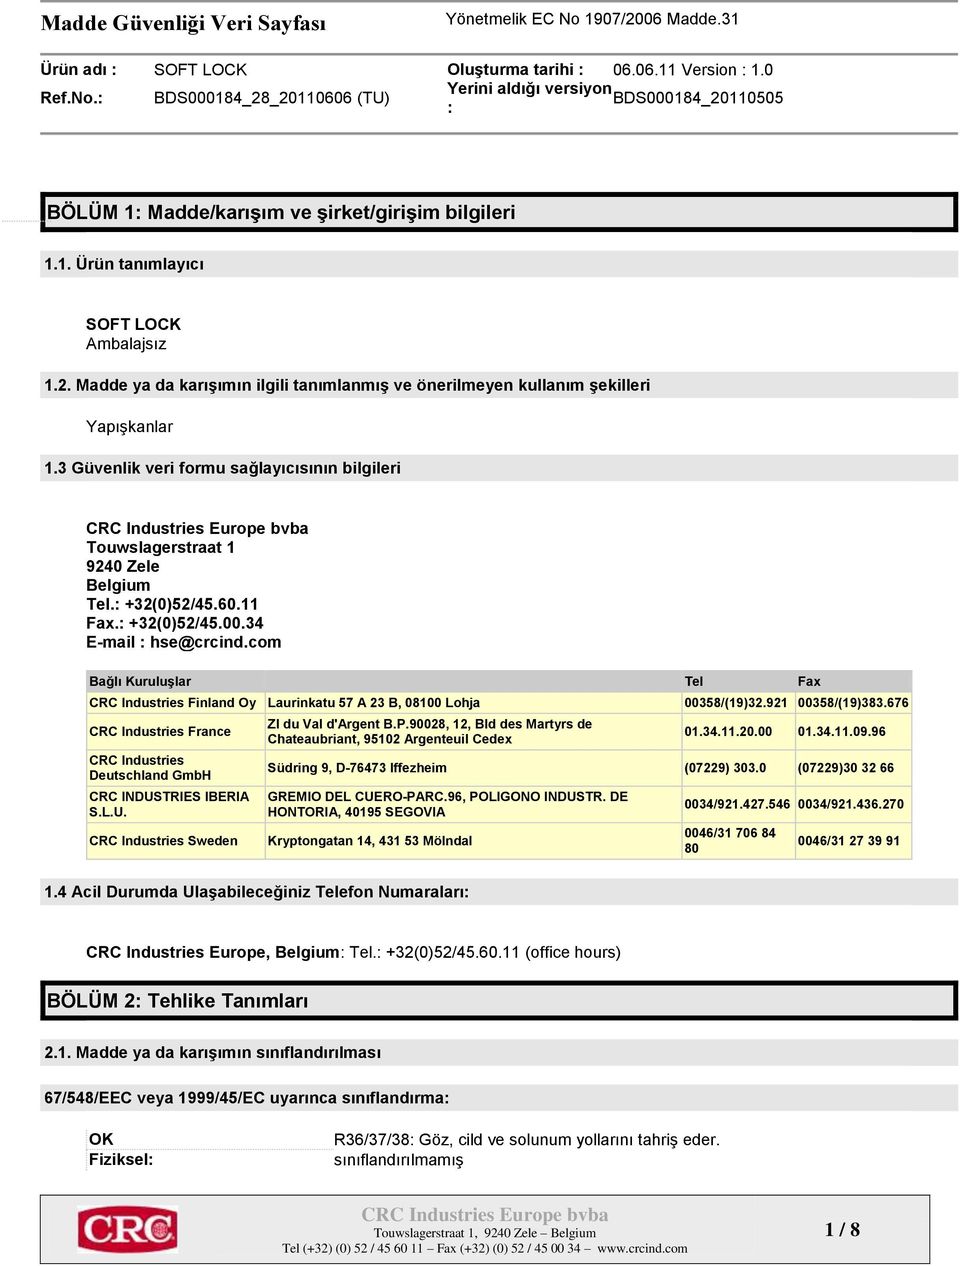 com Bağlı Kuruluşlar Tel Fax CRC Industries Finland Oy Laurinkatu 57 A 23 B, 08100 Lohja 00358/(19)32.921 00358/(19)383.